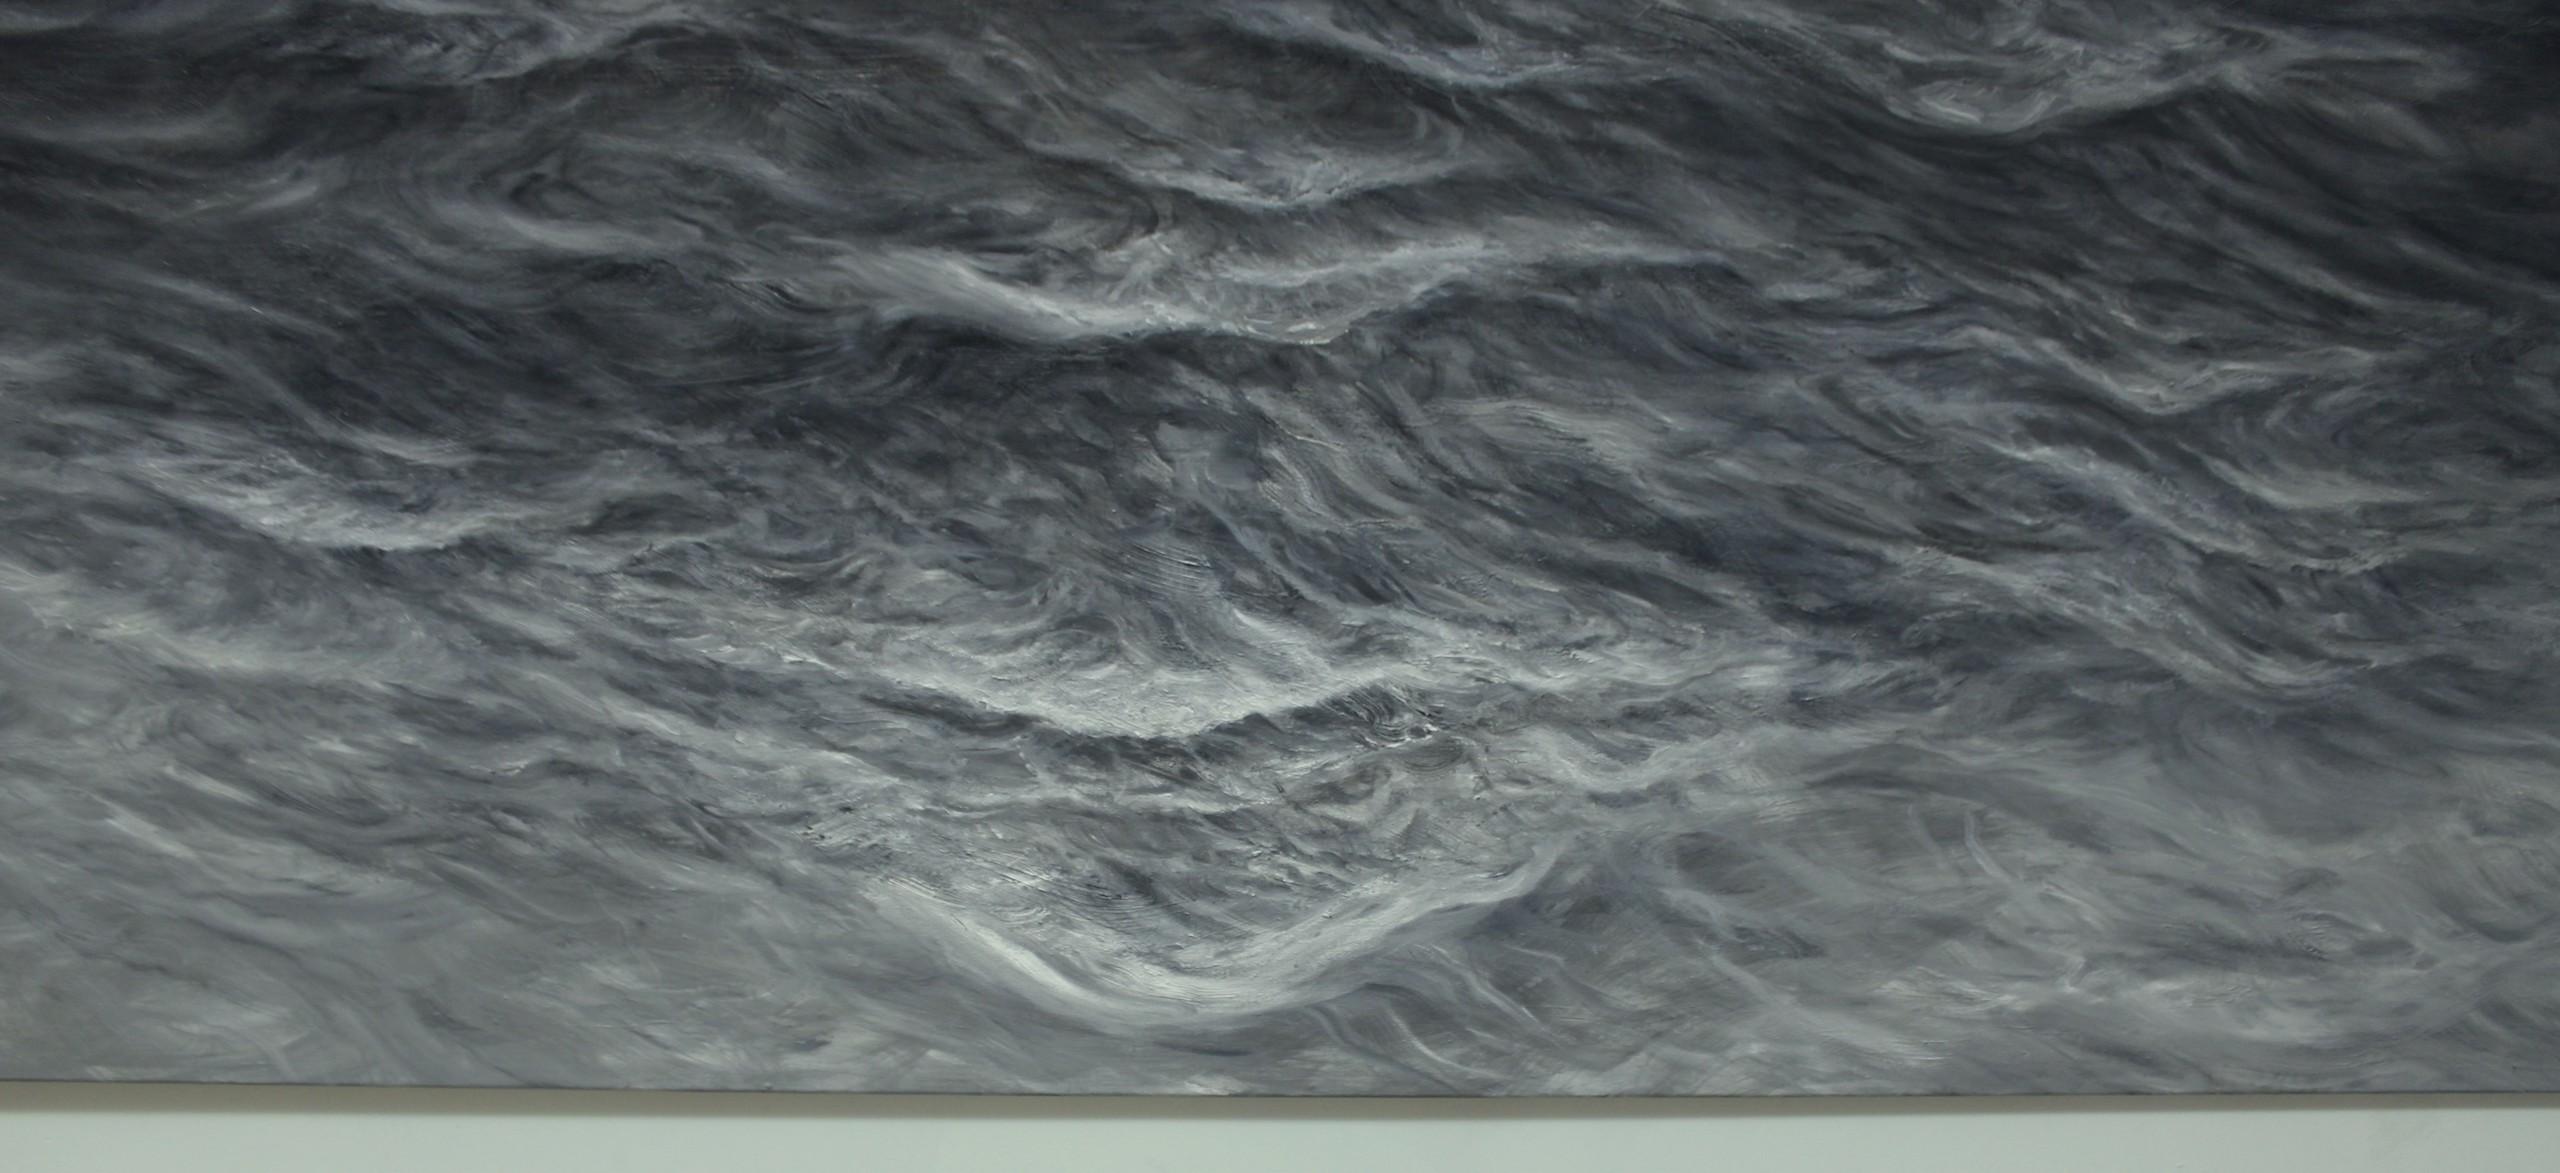 Perpetual by Franco Salas Borquez - Contemporary oil painting, seascape, waves For Sale 6